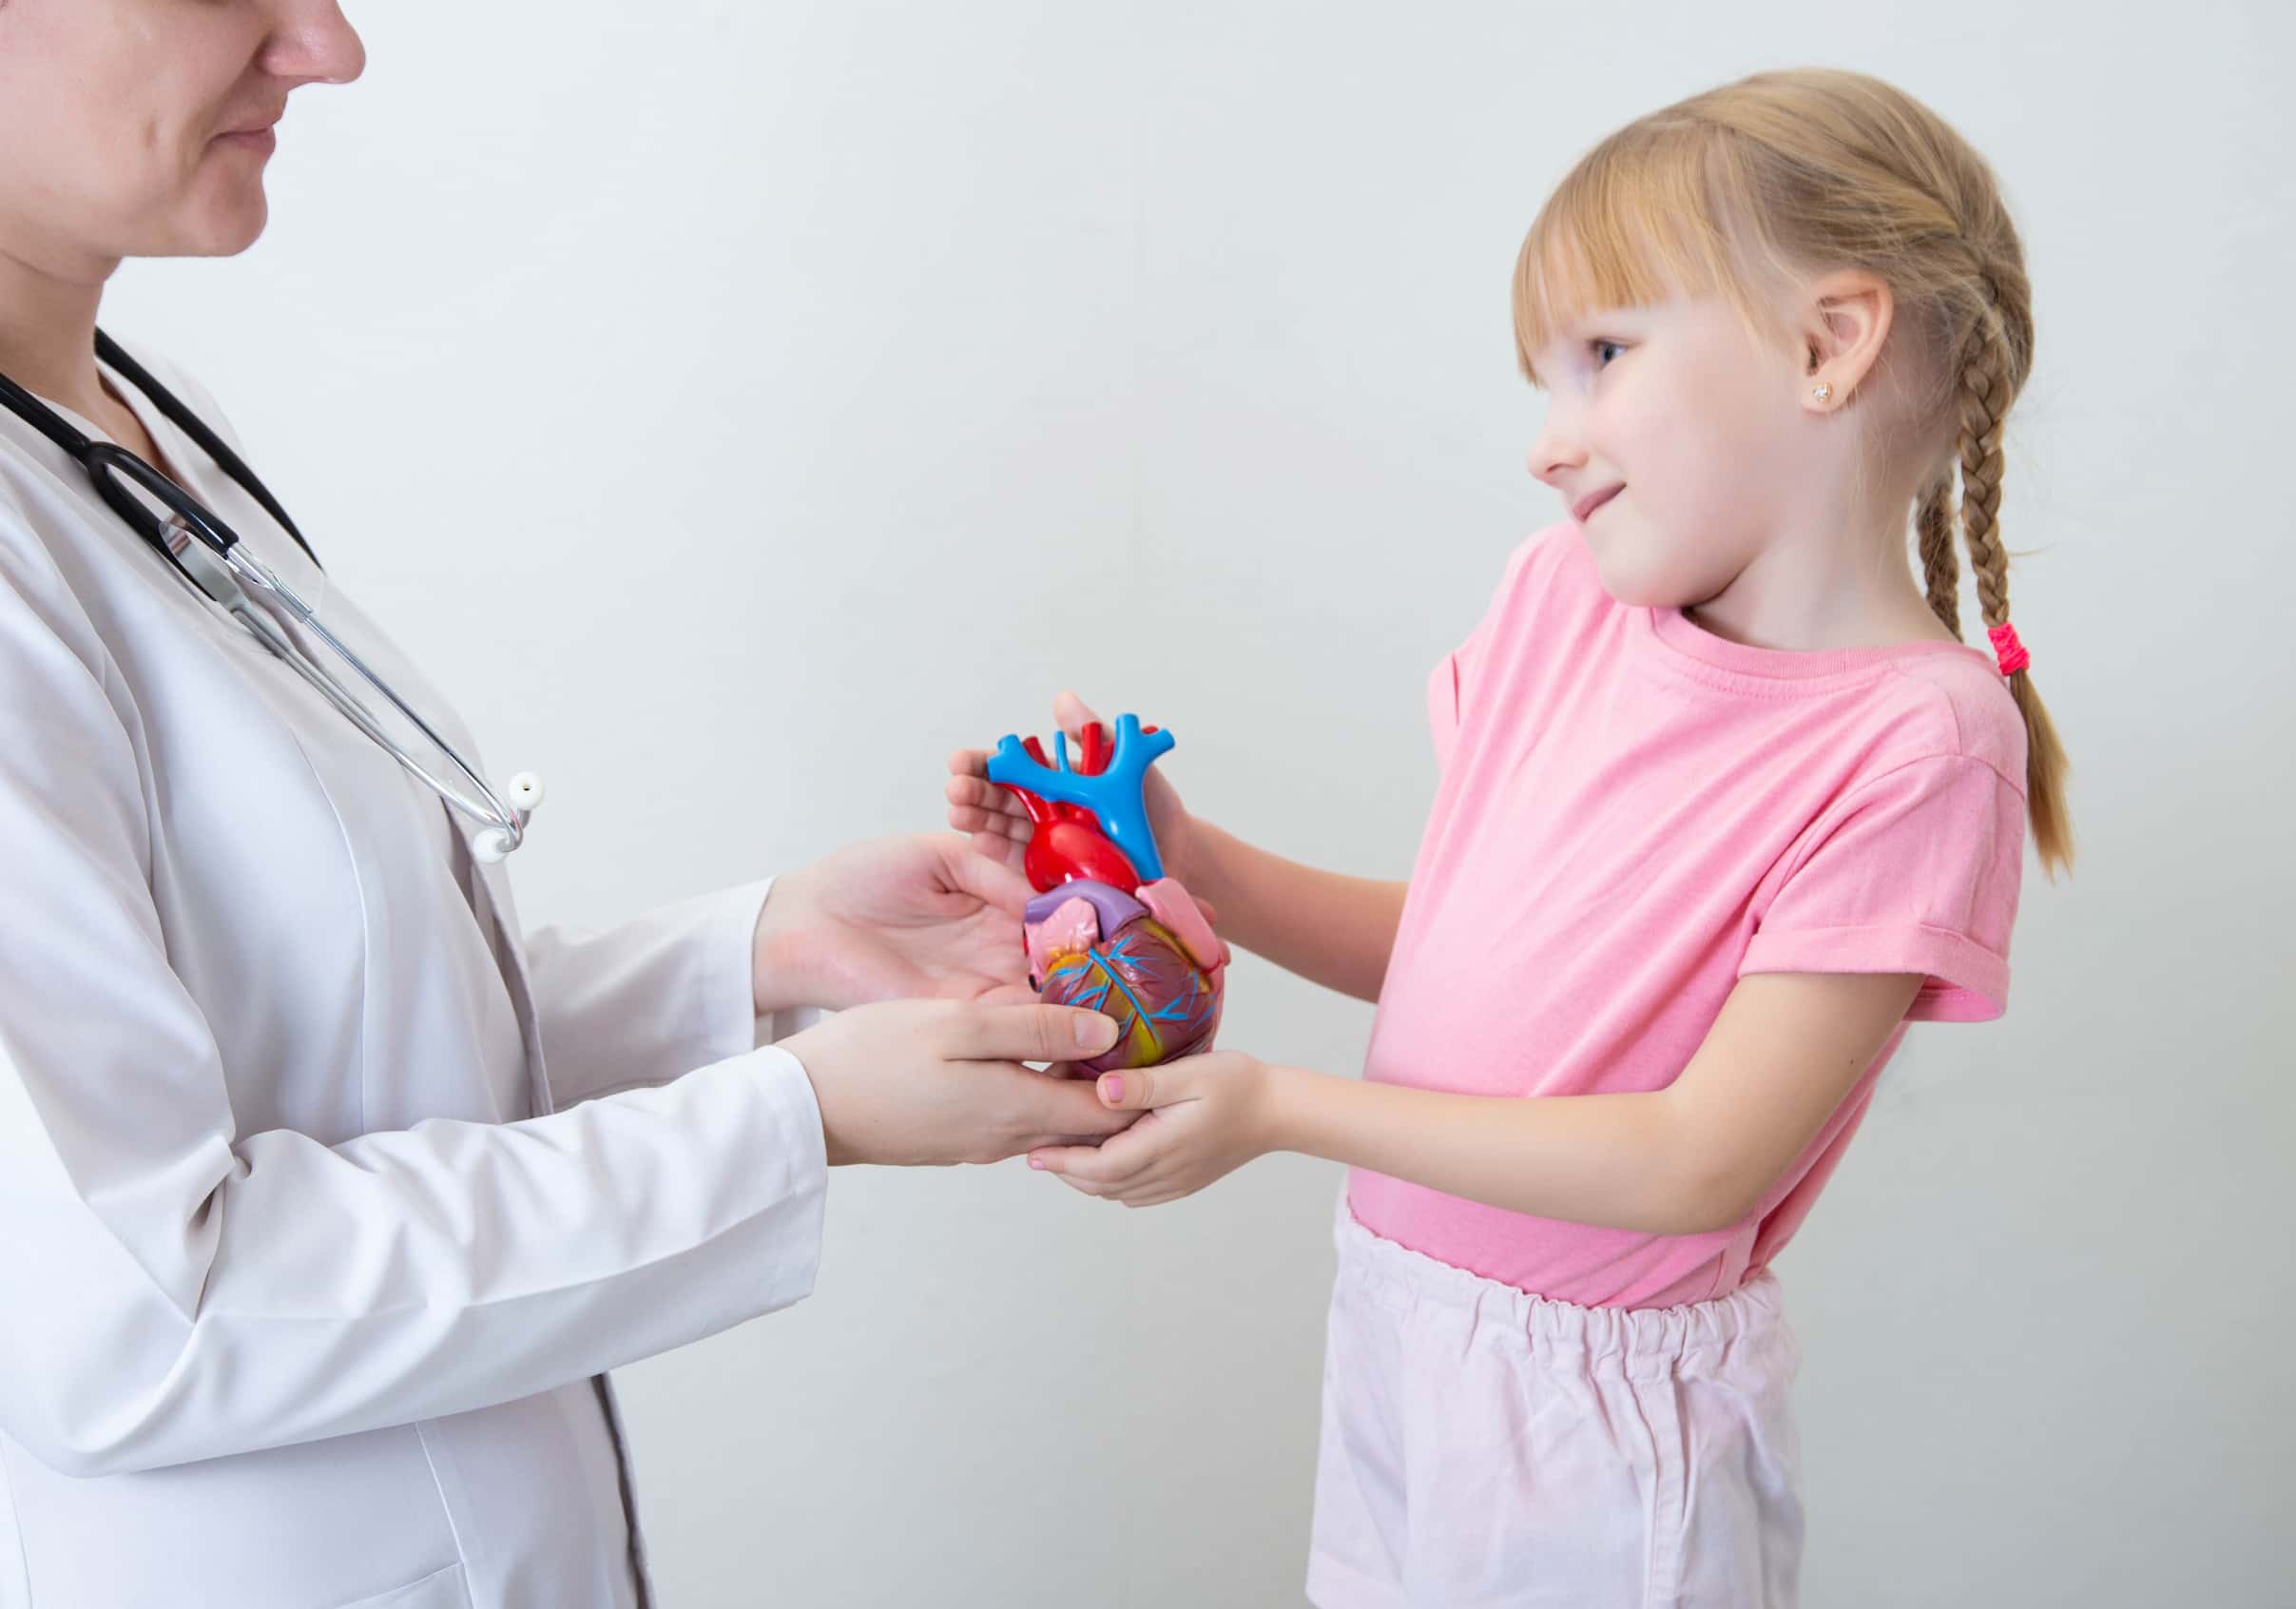 Turkiye pediatric cardiac surgery procedure